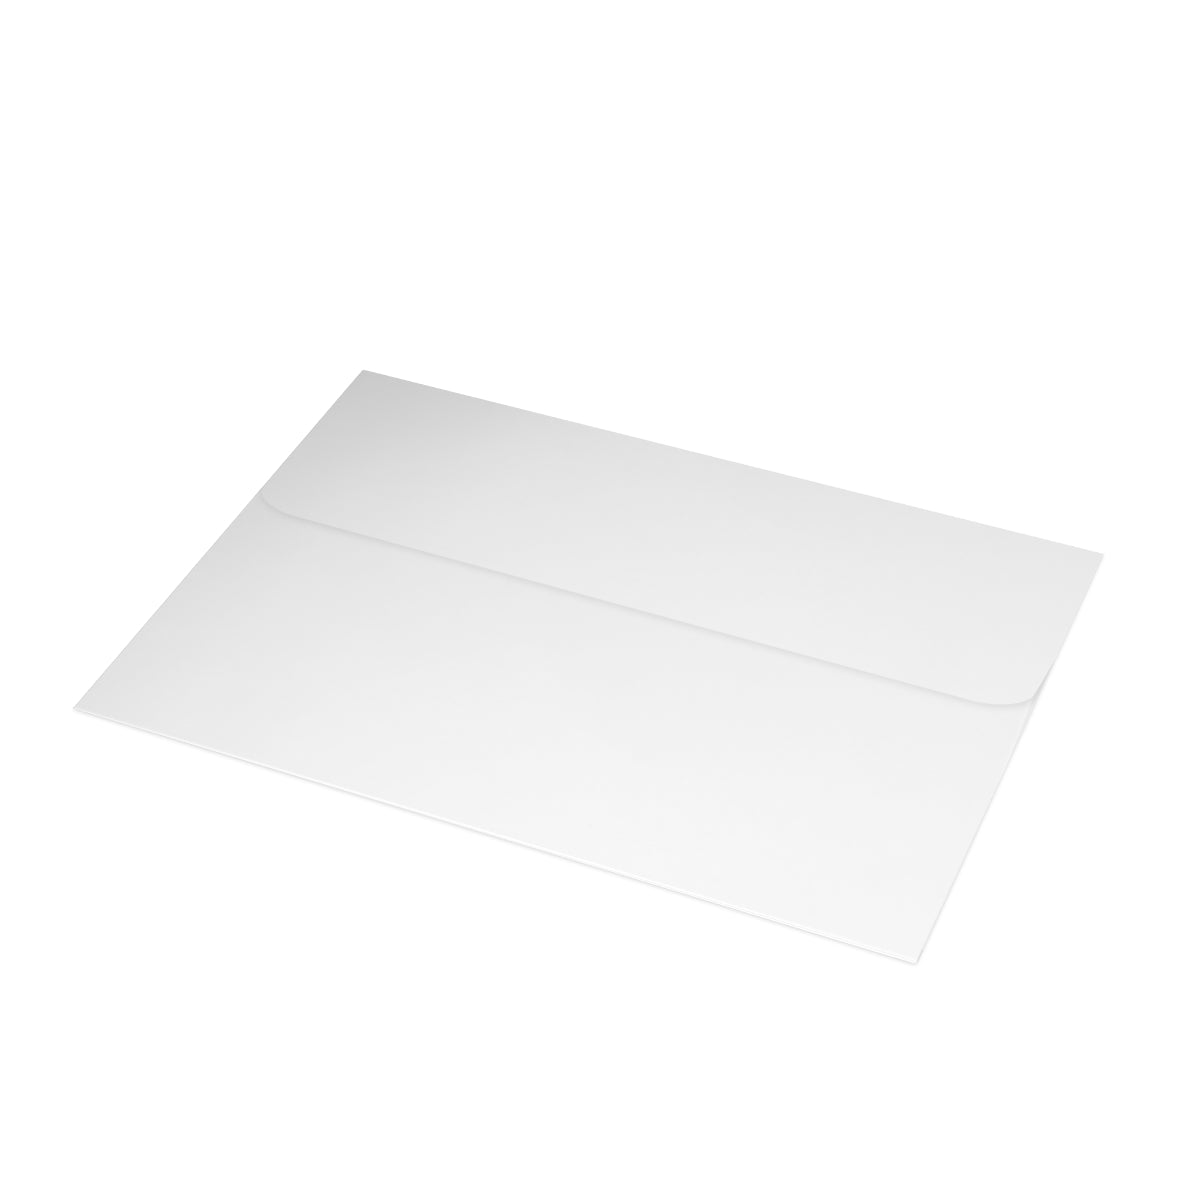 Steamboat Springs Folded Matte Notecards + Envelopes (10pcs)